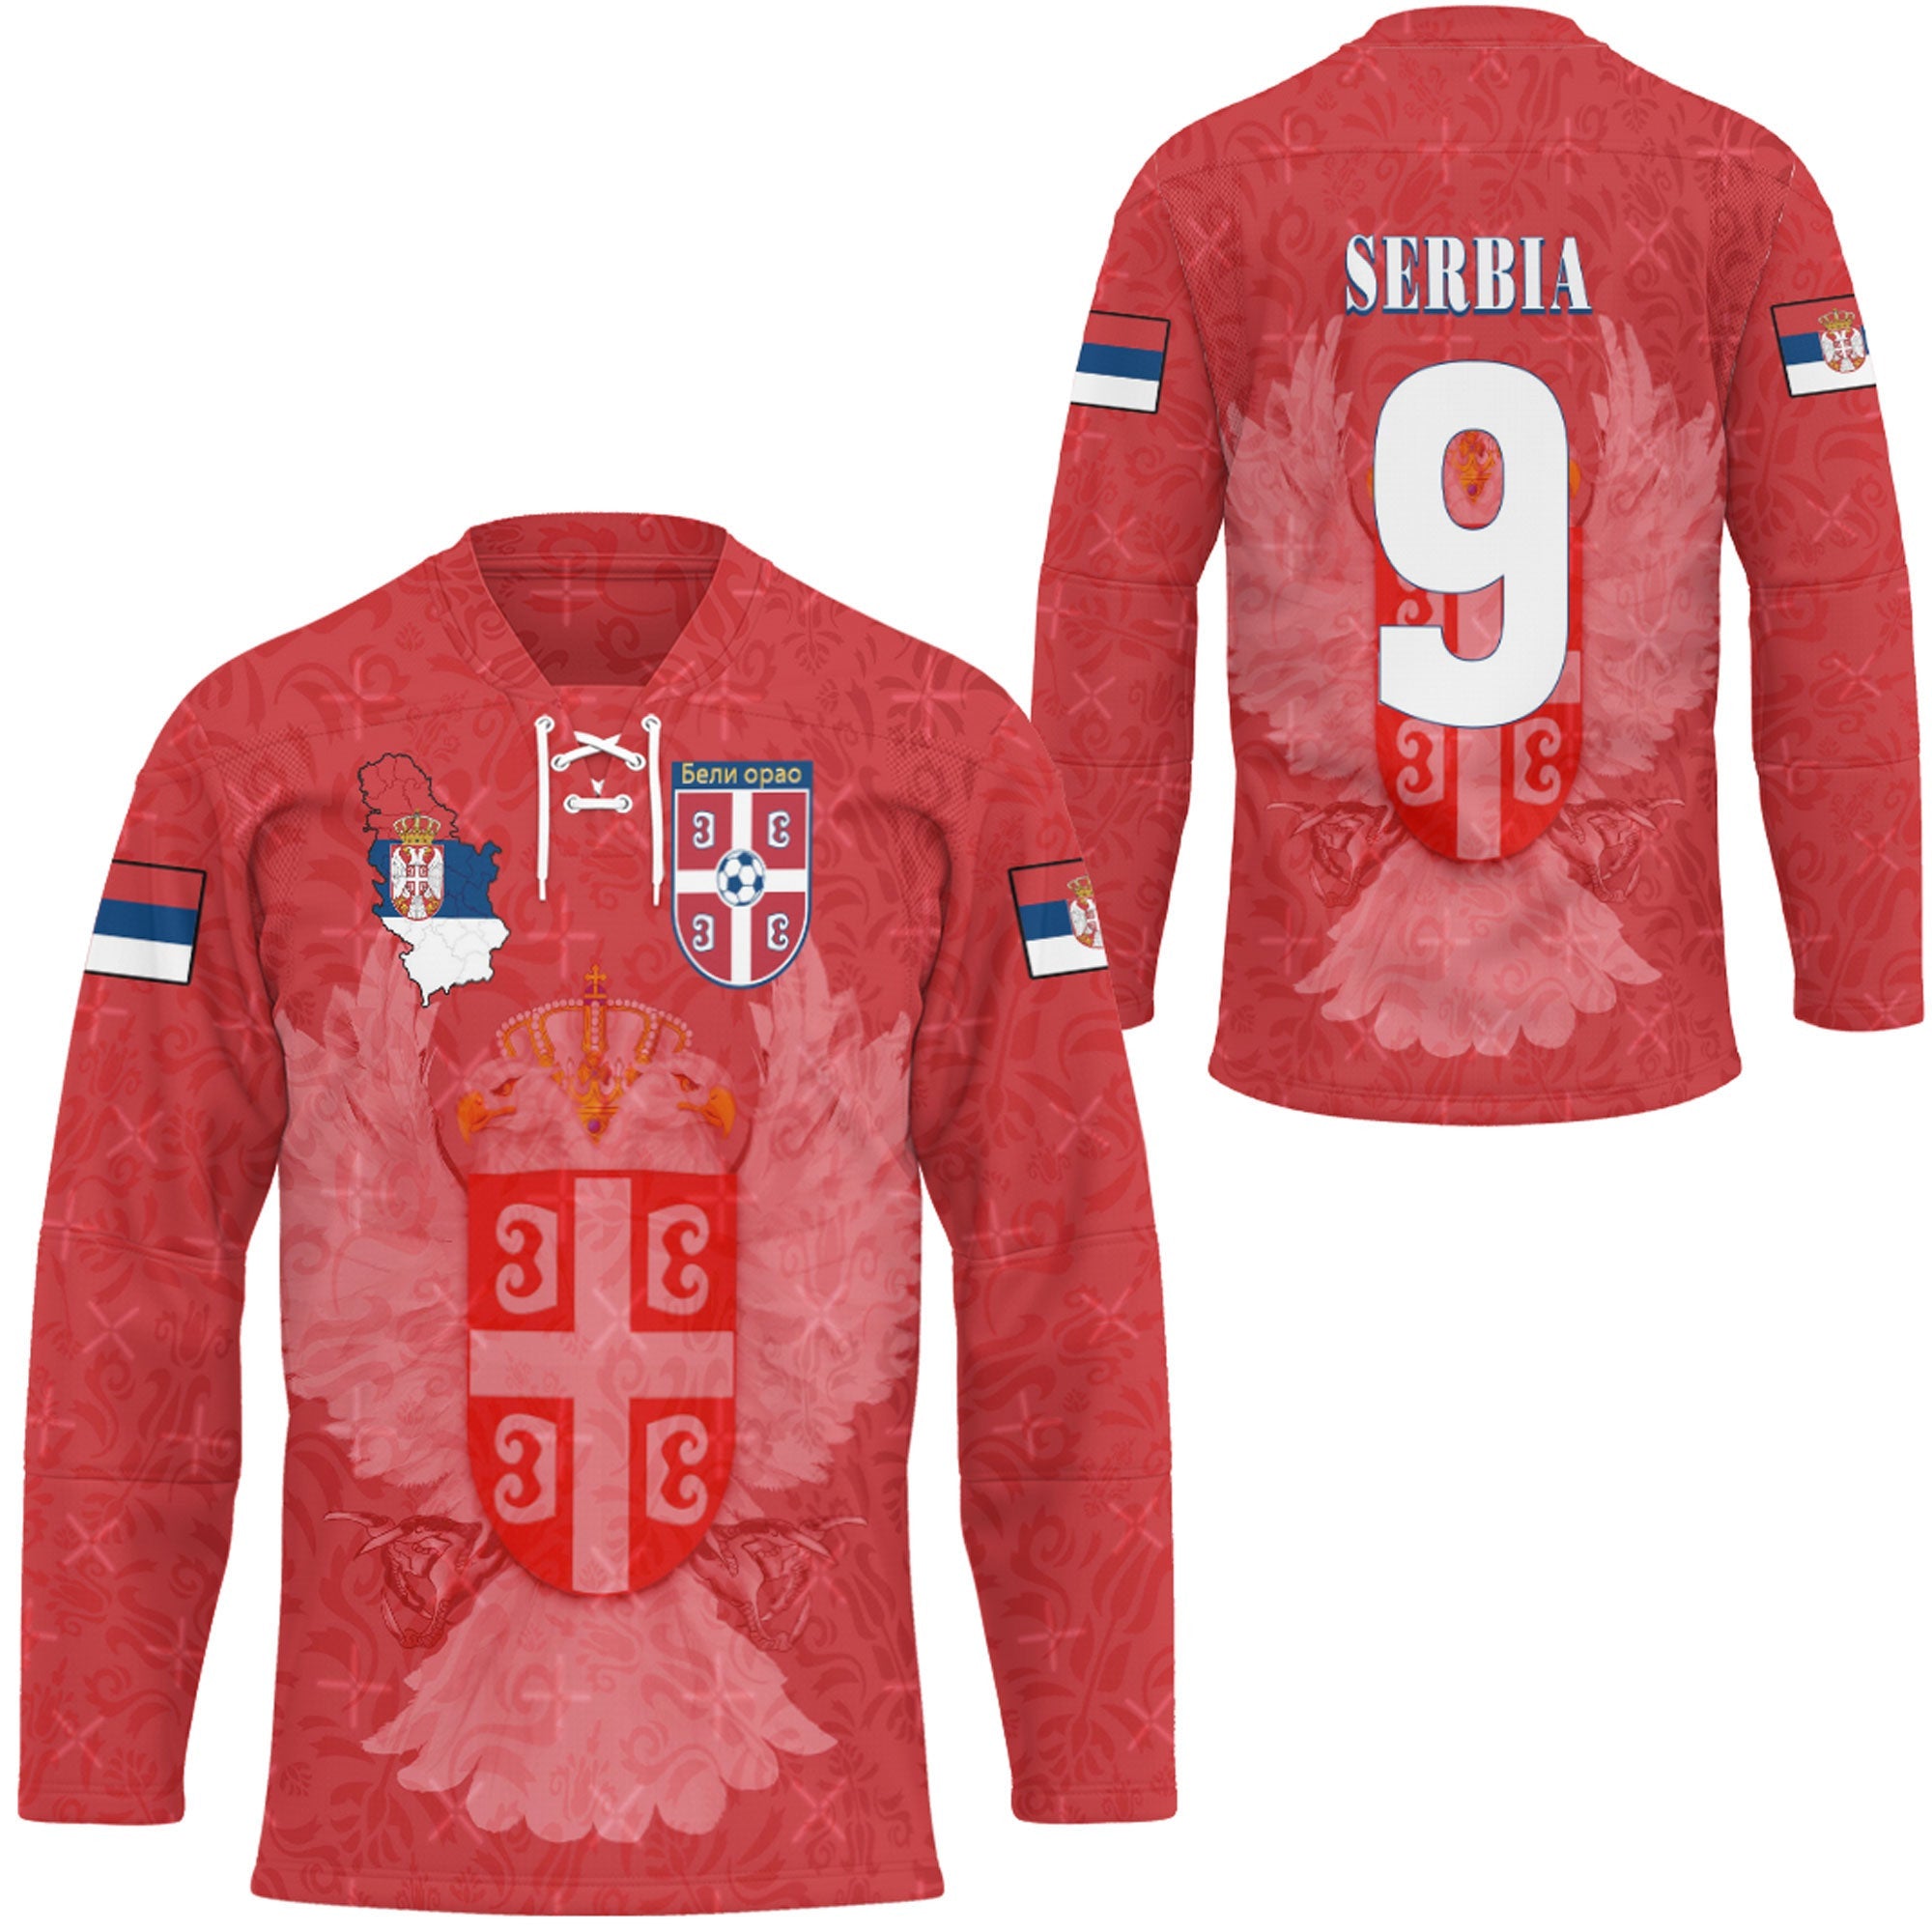 serbia-soccer-style-hockey-jersey